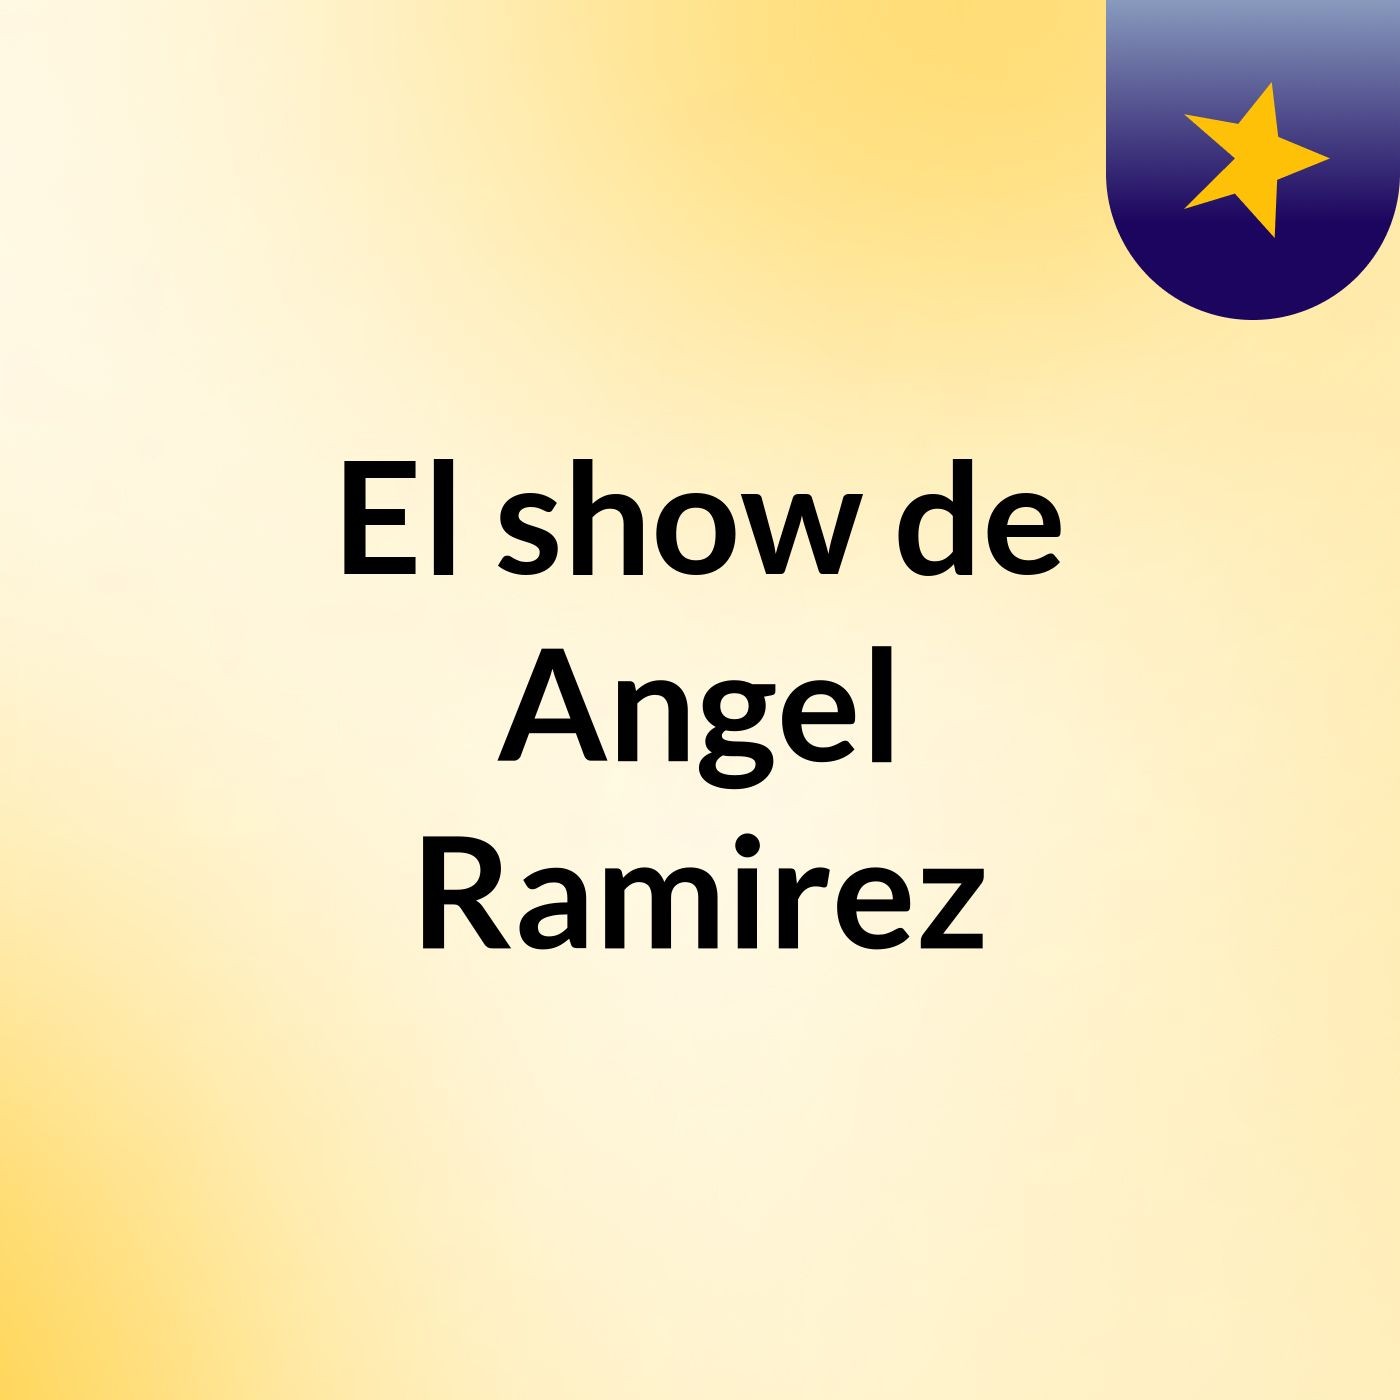 El show de Angel Ramirez